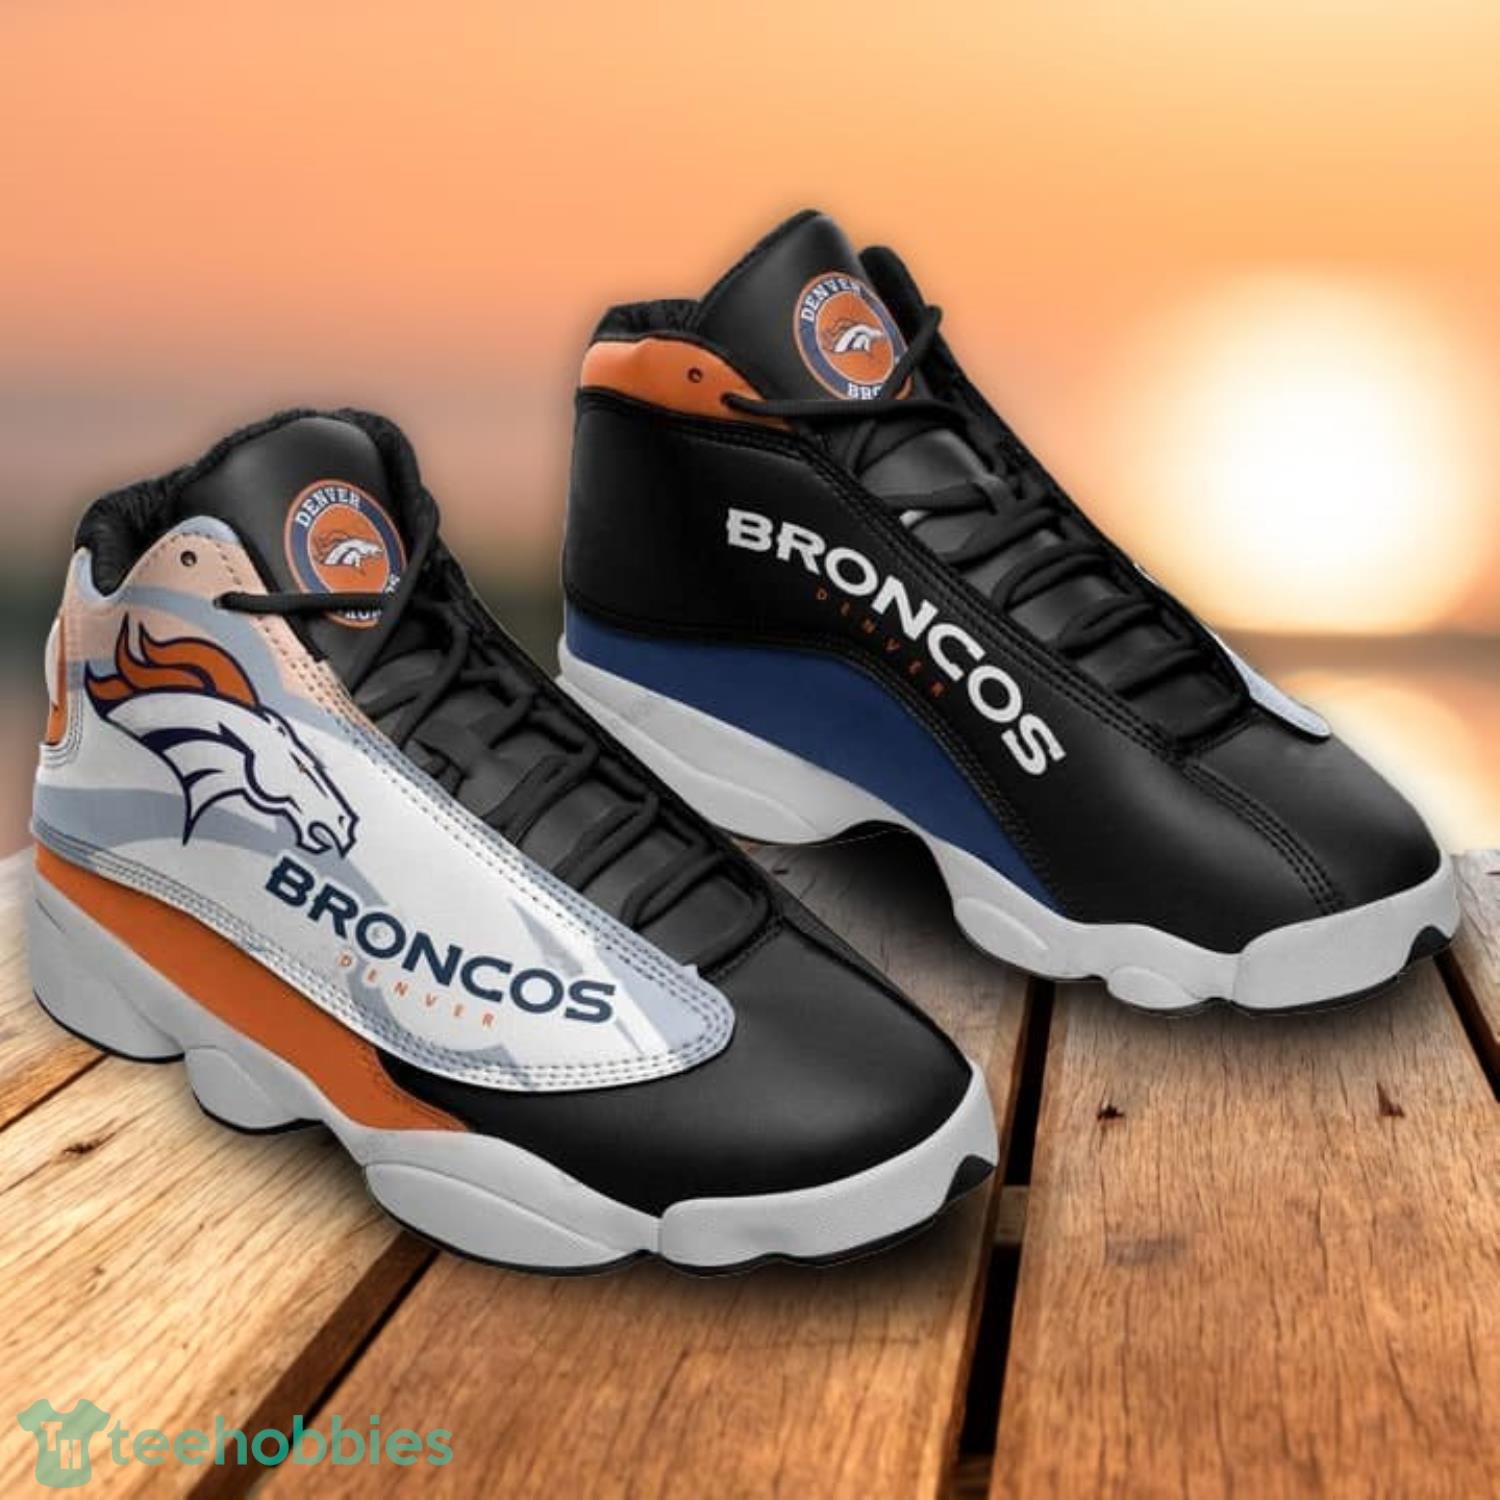 Denver Broncos Team Air Jordan 13 Shoes Custom Sneakers Product Photo 1